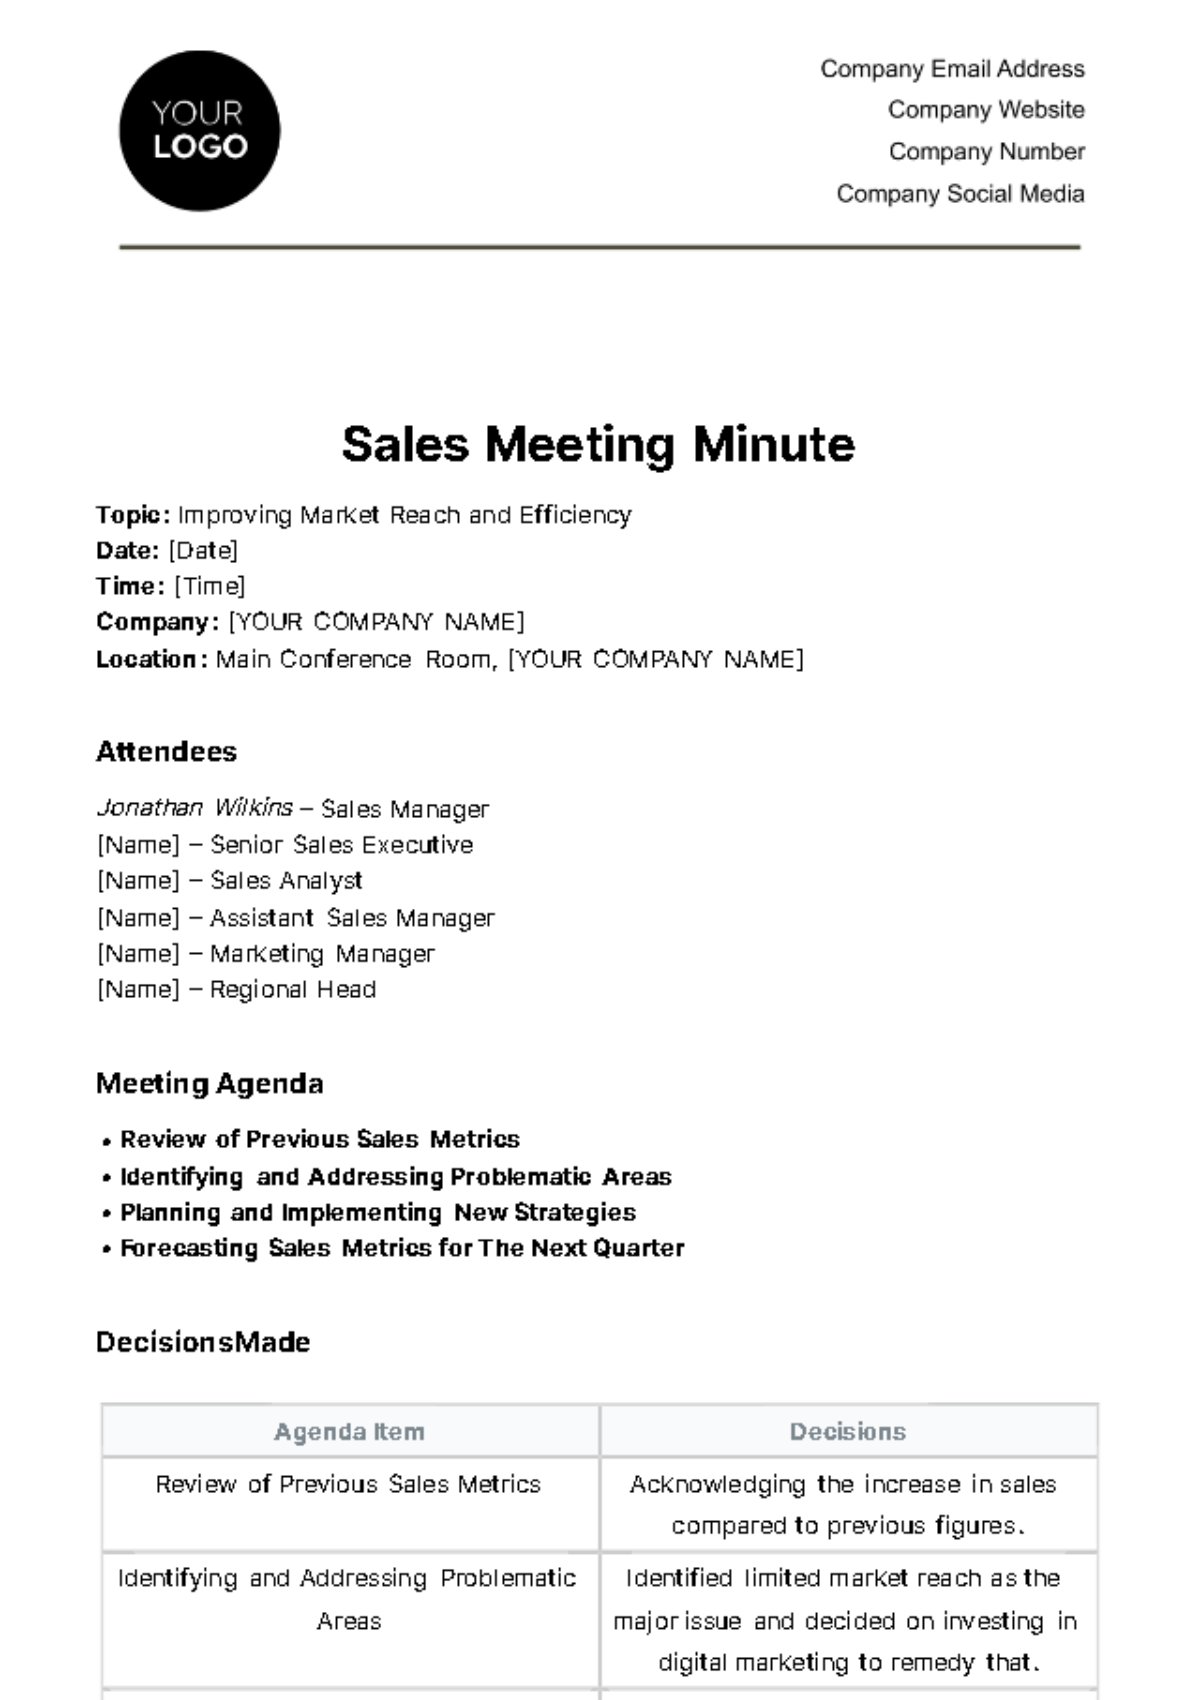 Free Sales Meeting Minute Template